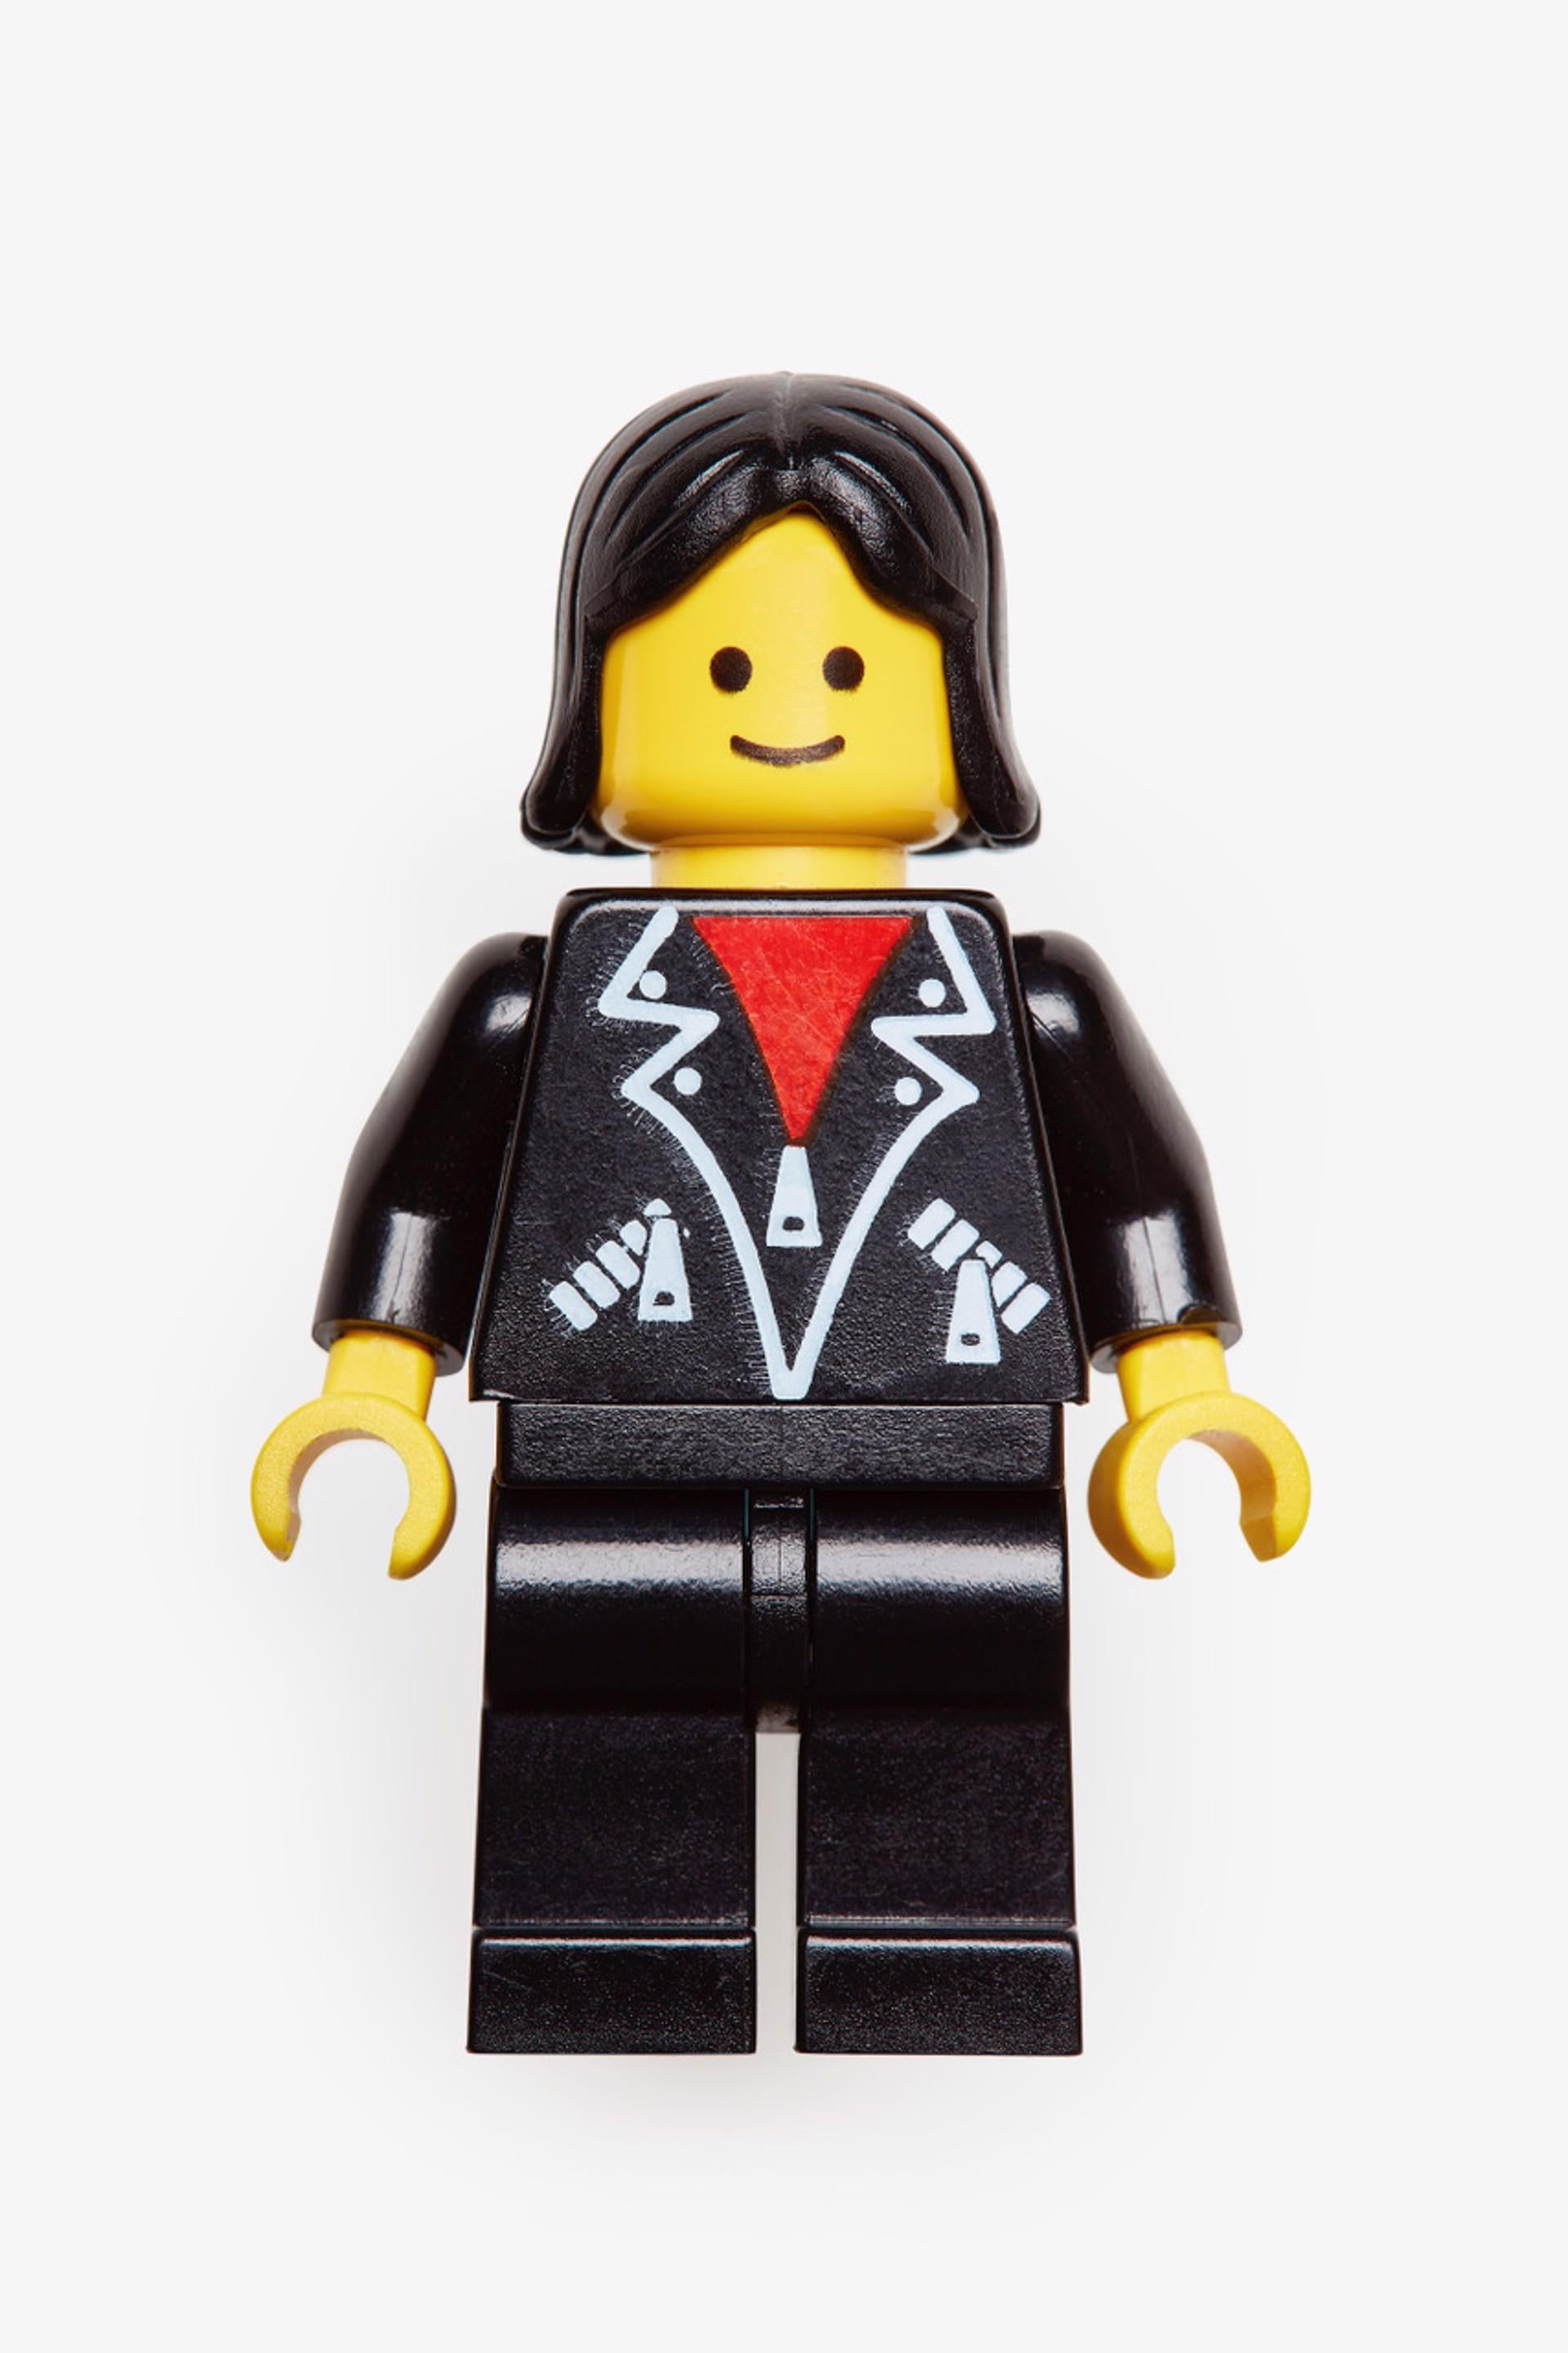 Peter Andrew Lusztyk – Lego „Ramones“, Fotografie 2021, Druck nach